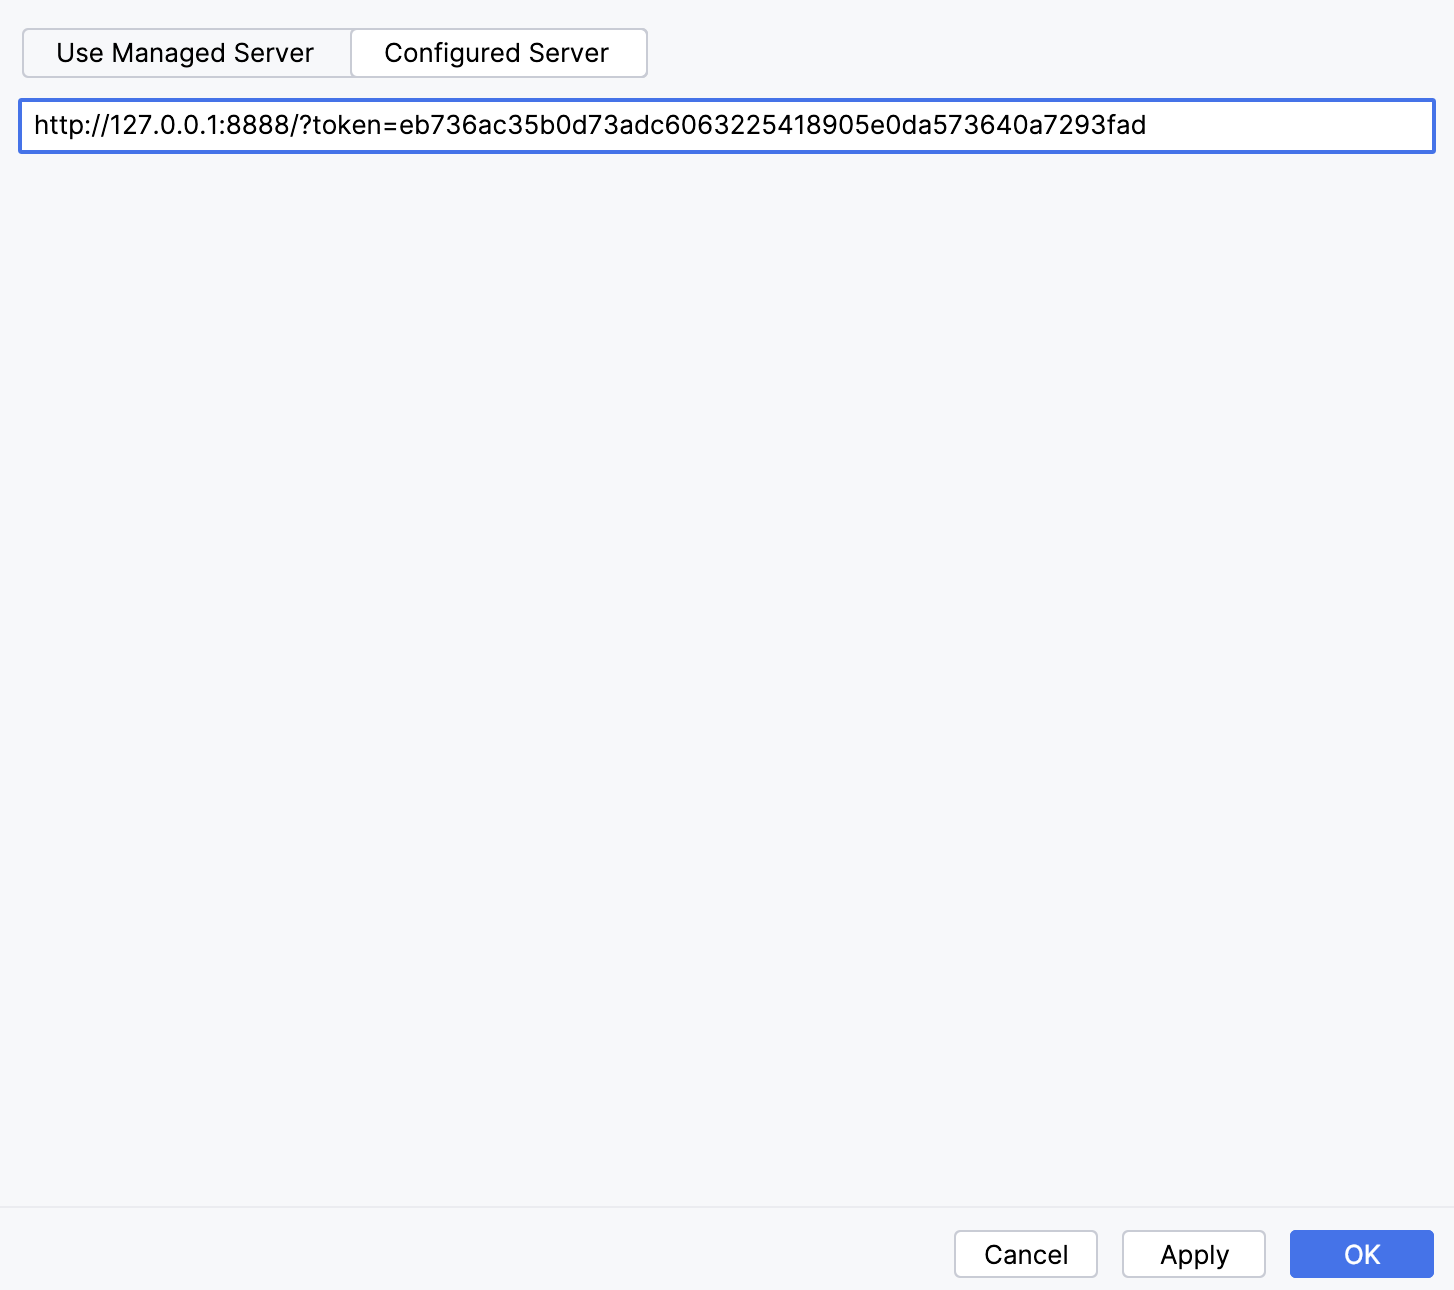 Configure a Jupyter server. Settings dialog